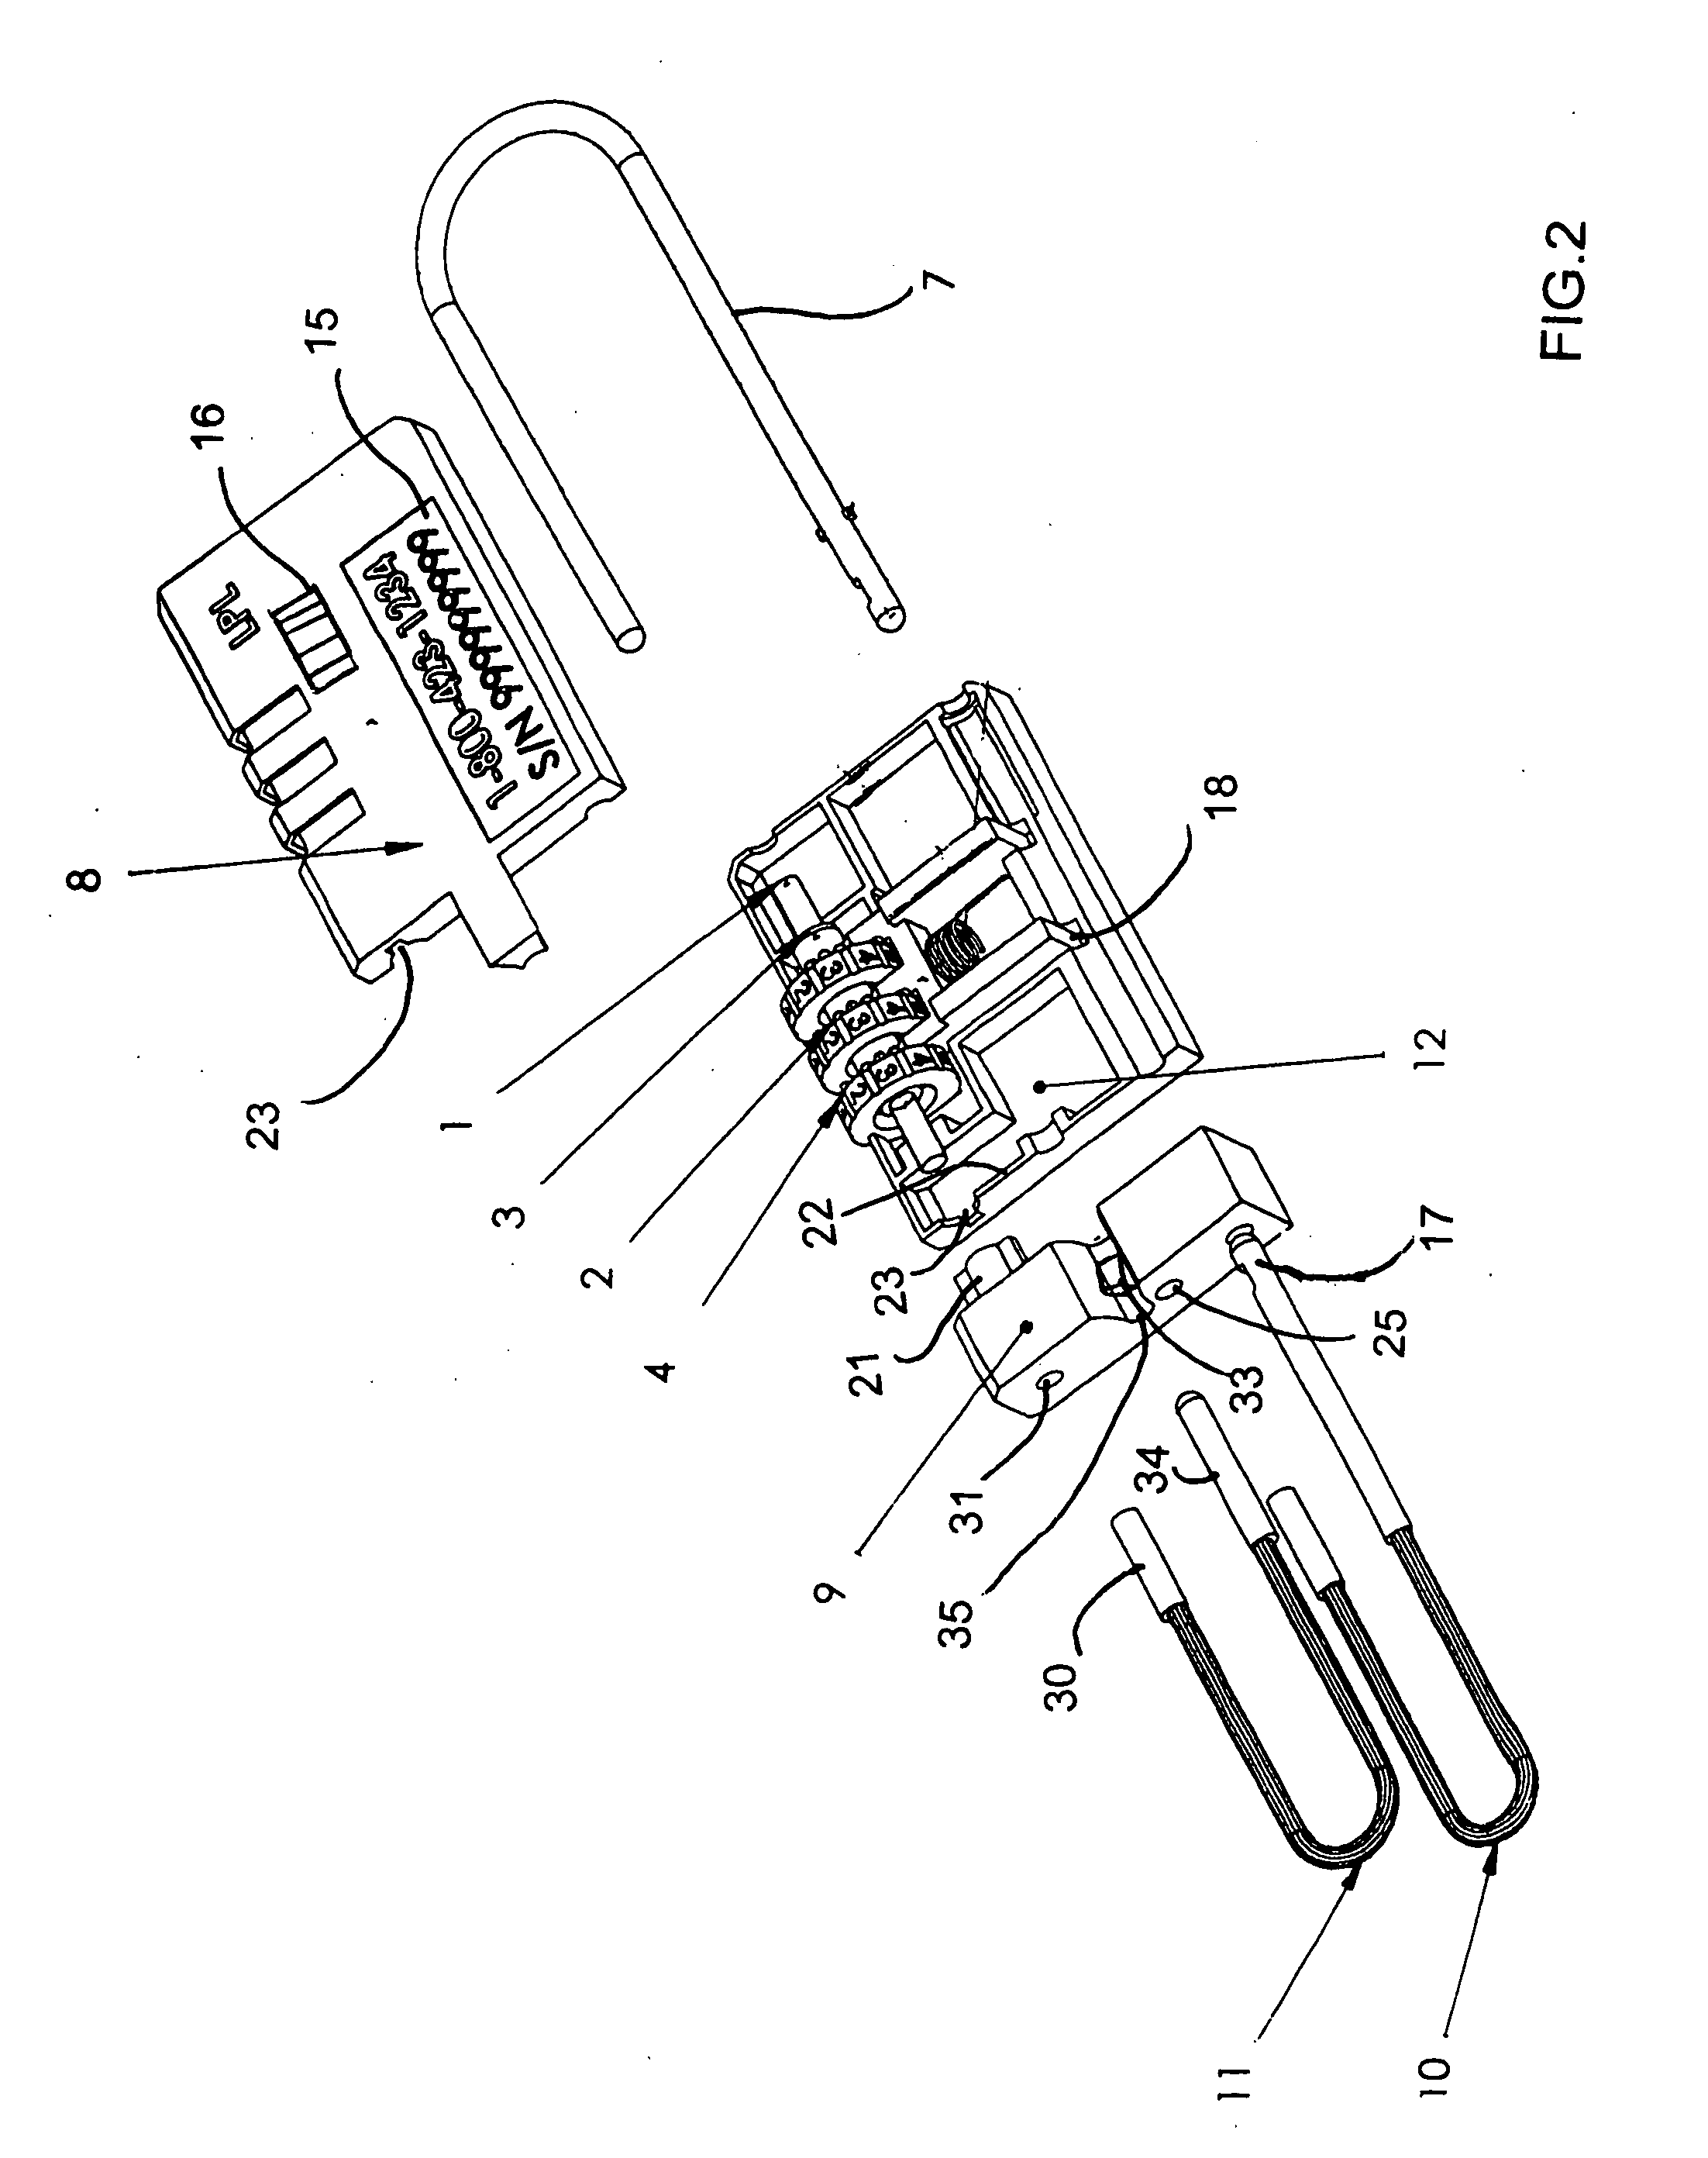 Multi-shackle lock and method of using the multi-shackle lock